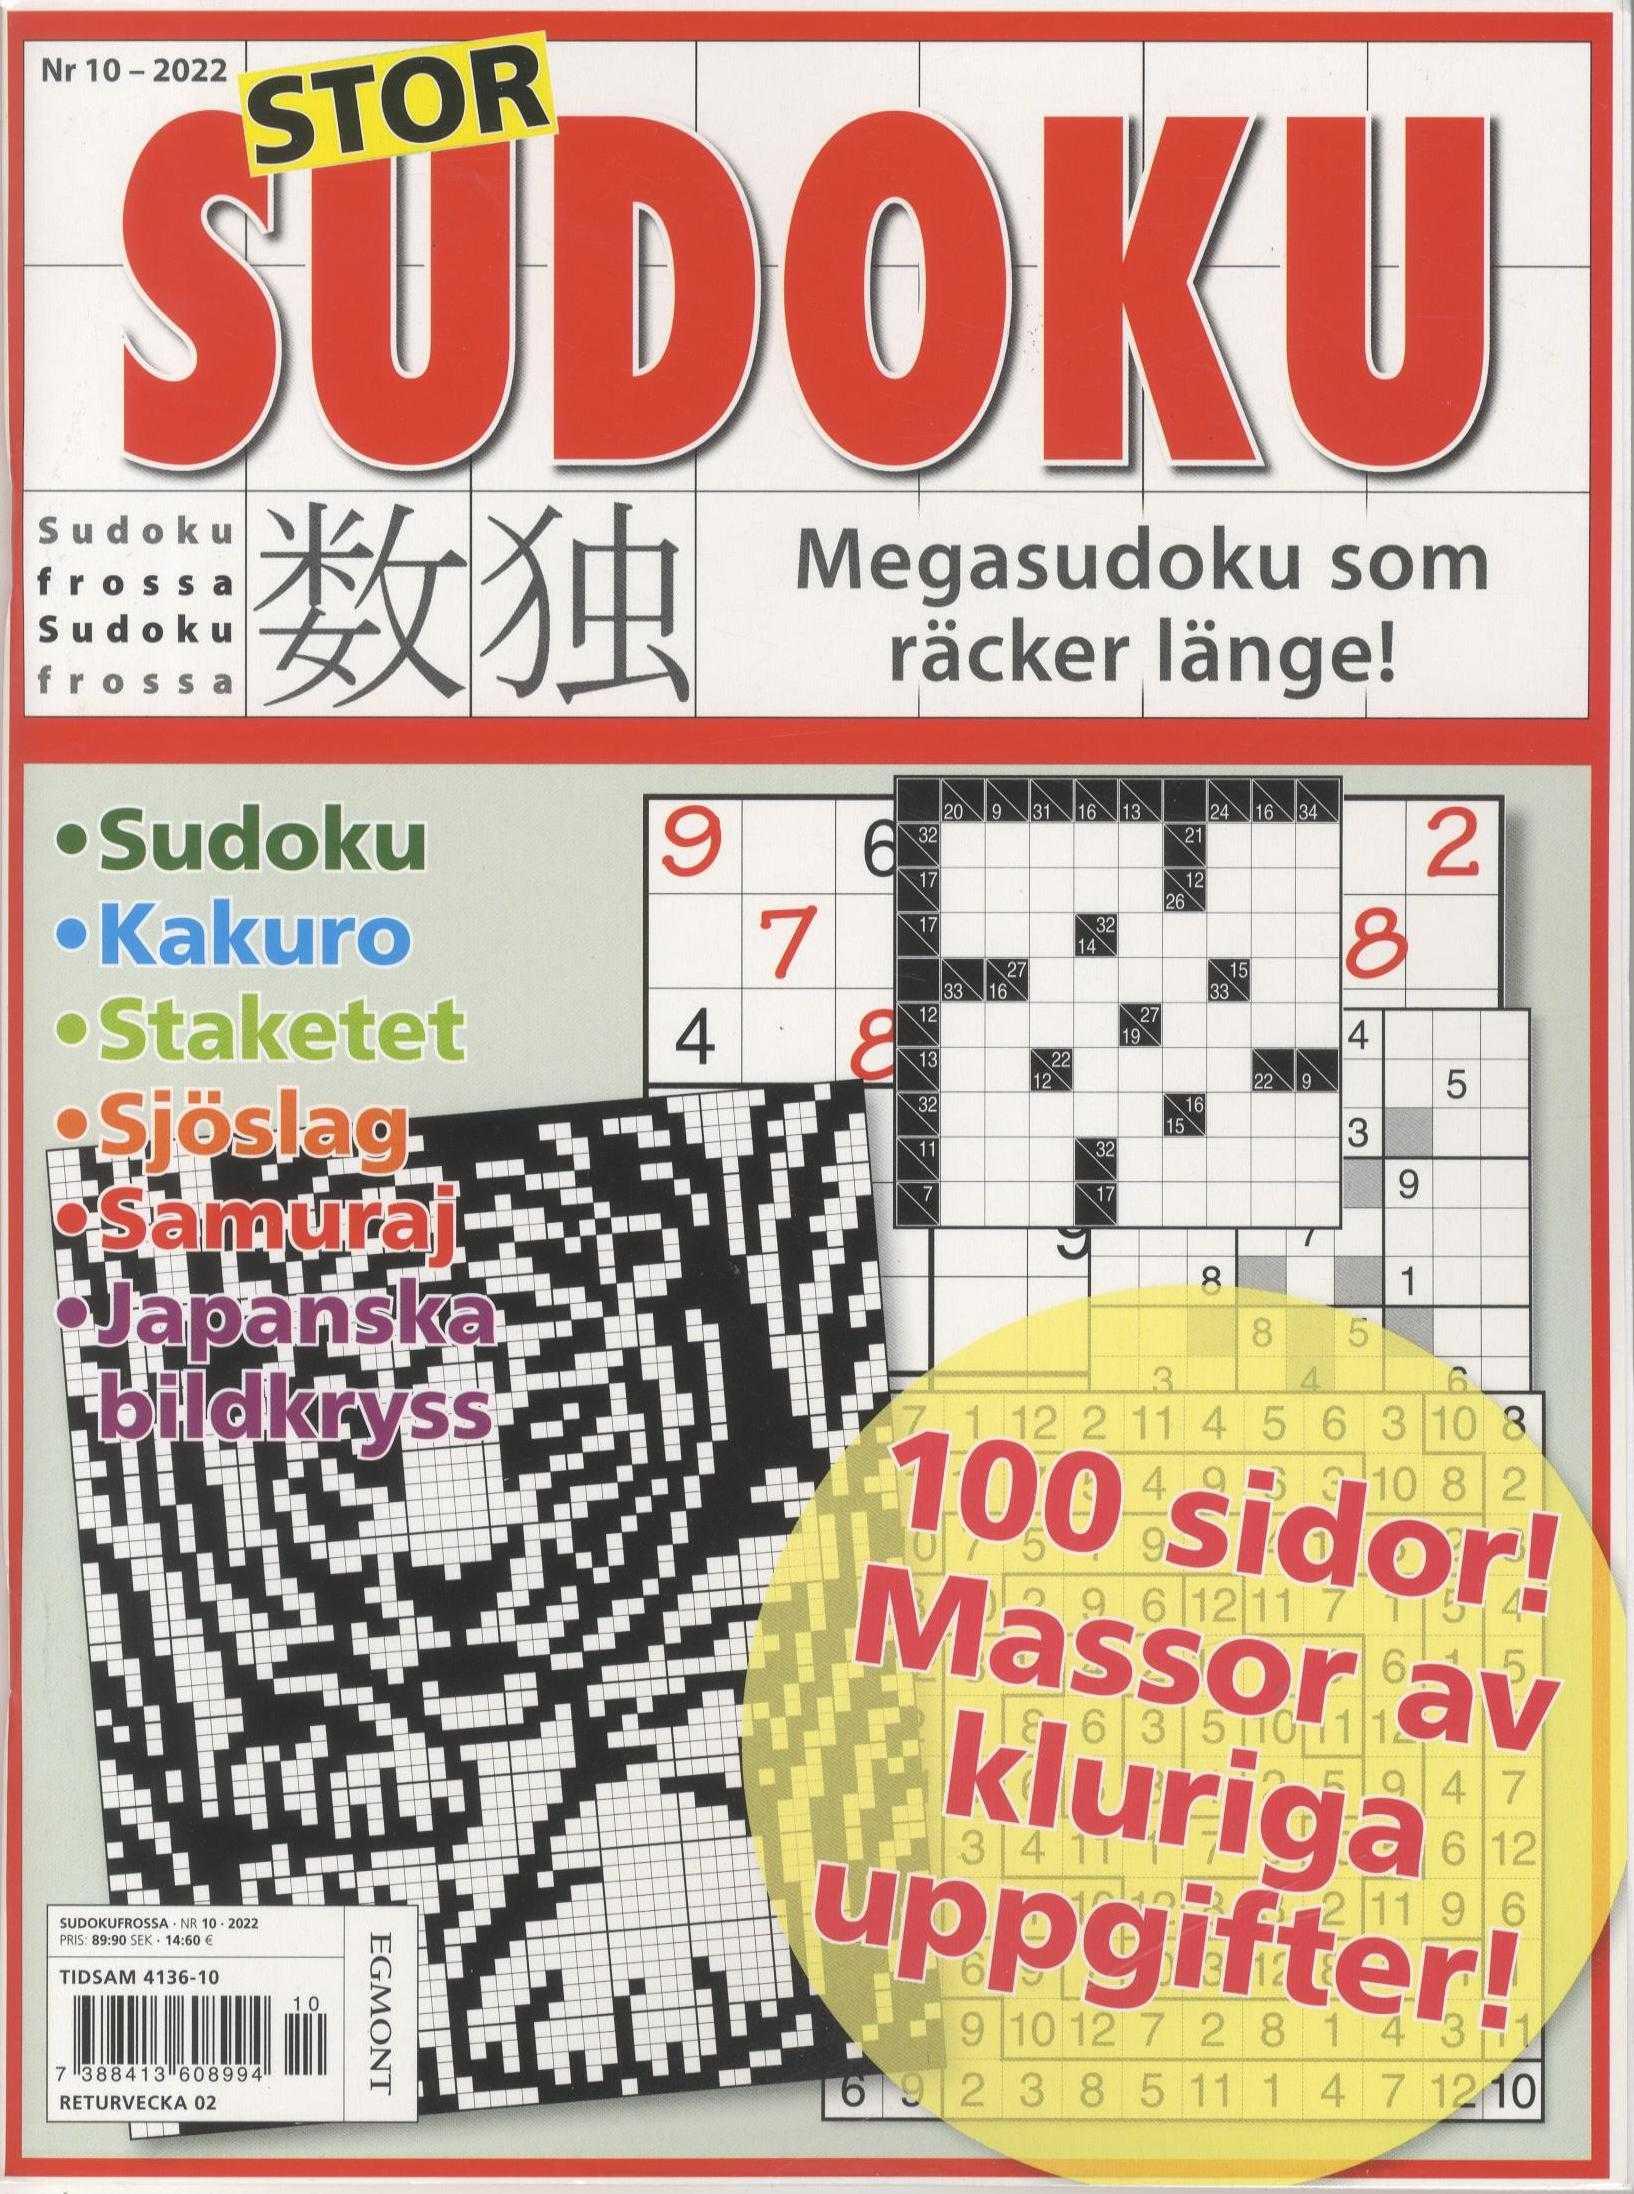 Sudoku Frossa